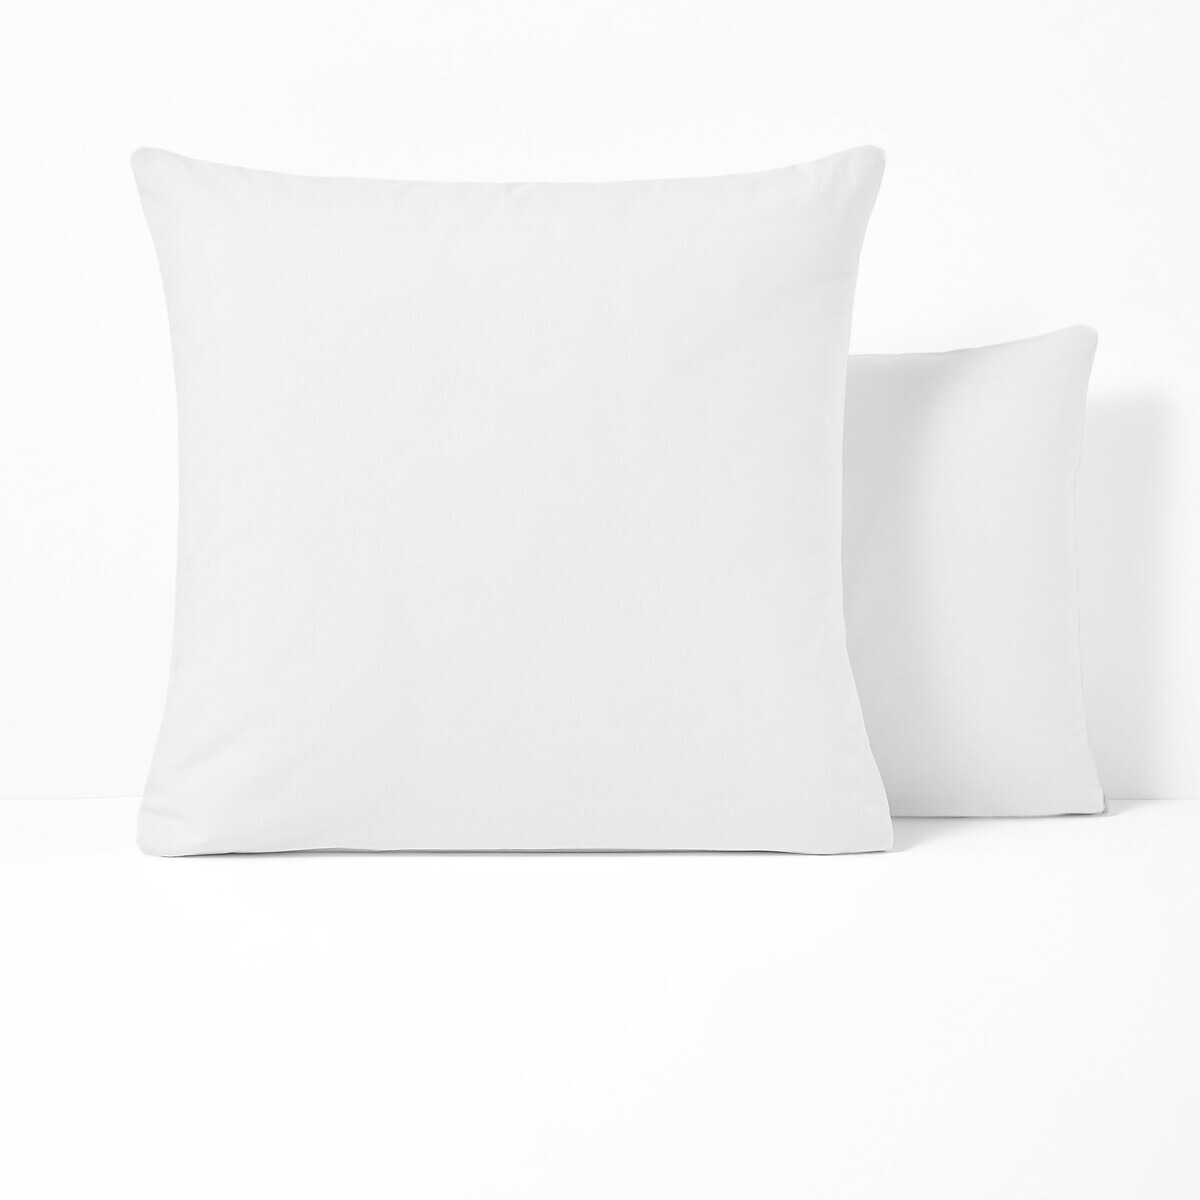 Scenario Plain 100% Organic Cotton Child's Pillowcase - image 1